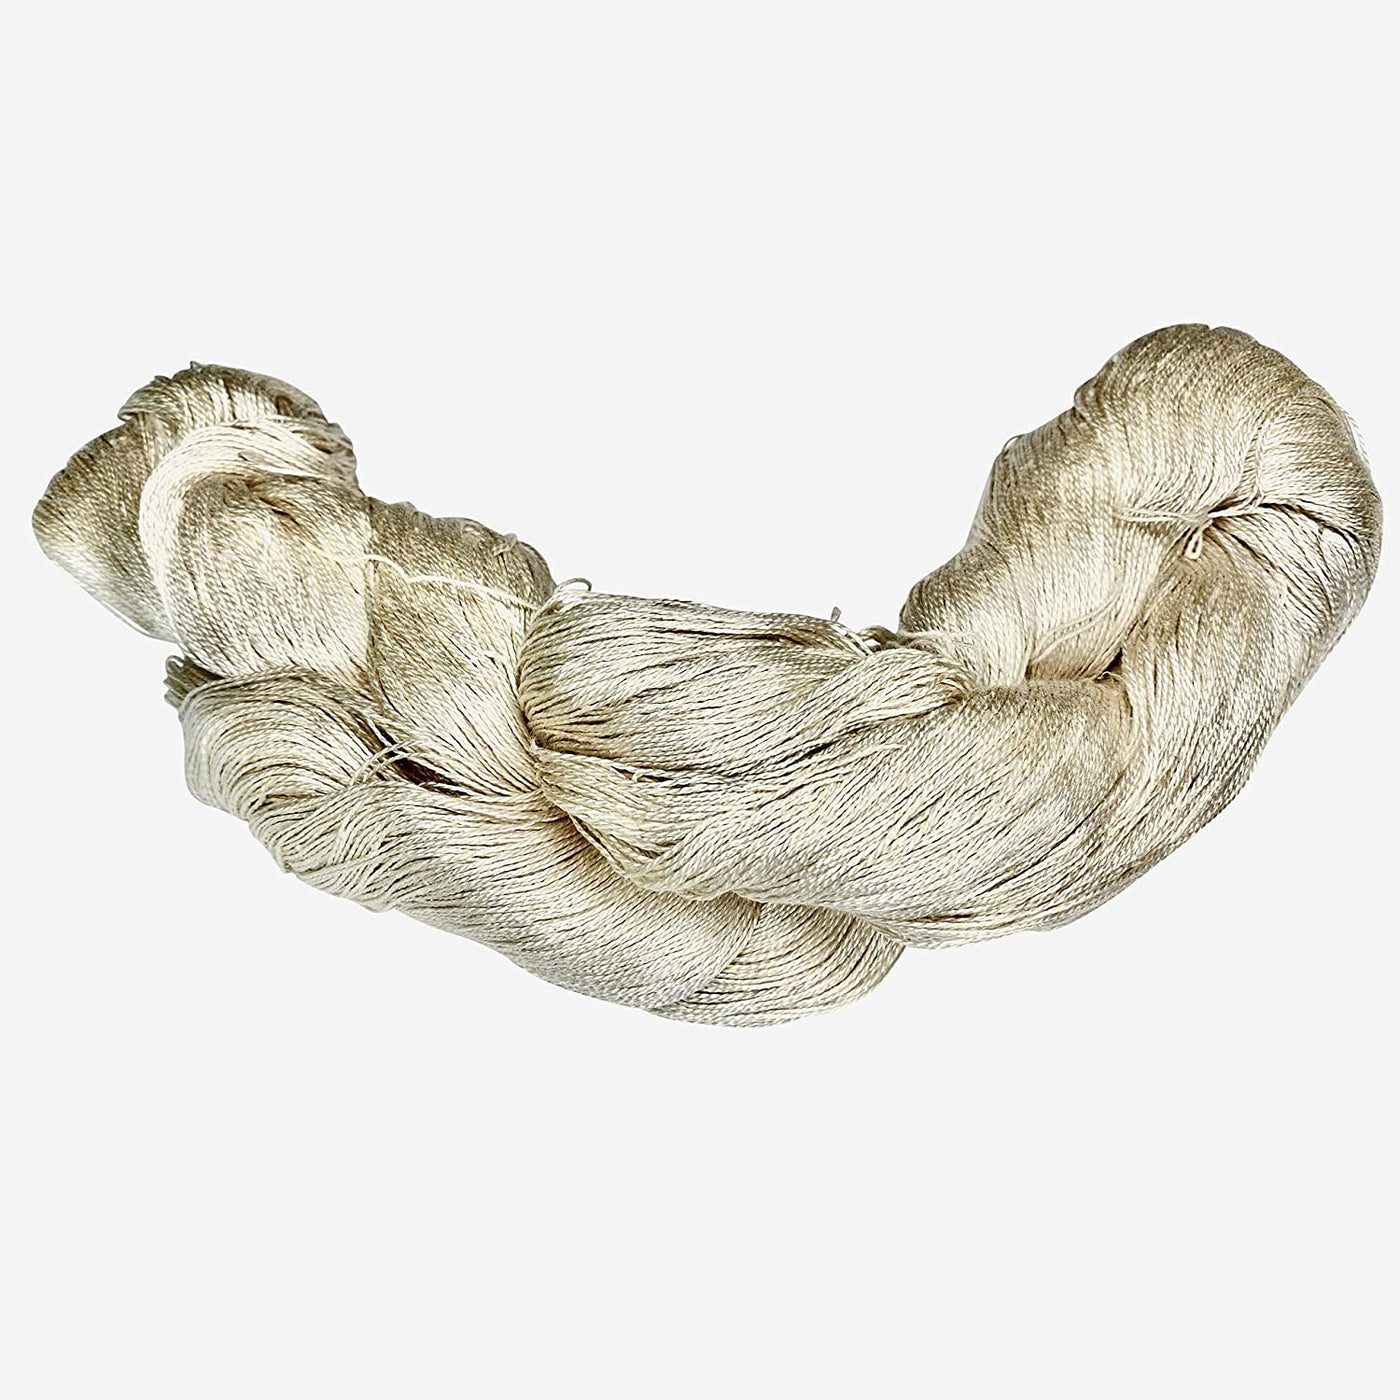 2x100 gram Mulberry Silk Yarn - 600M/100Gram - Corn Harvest